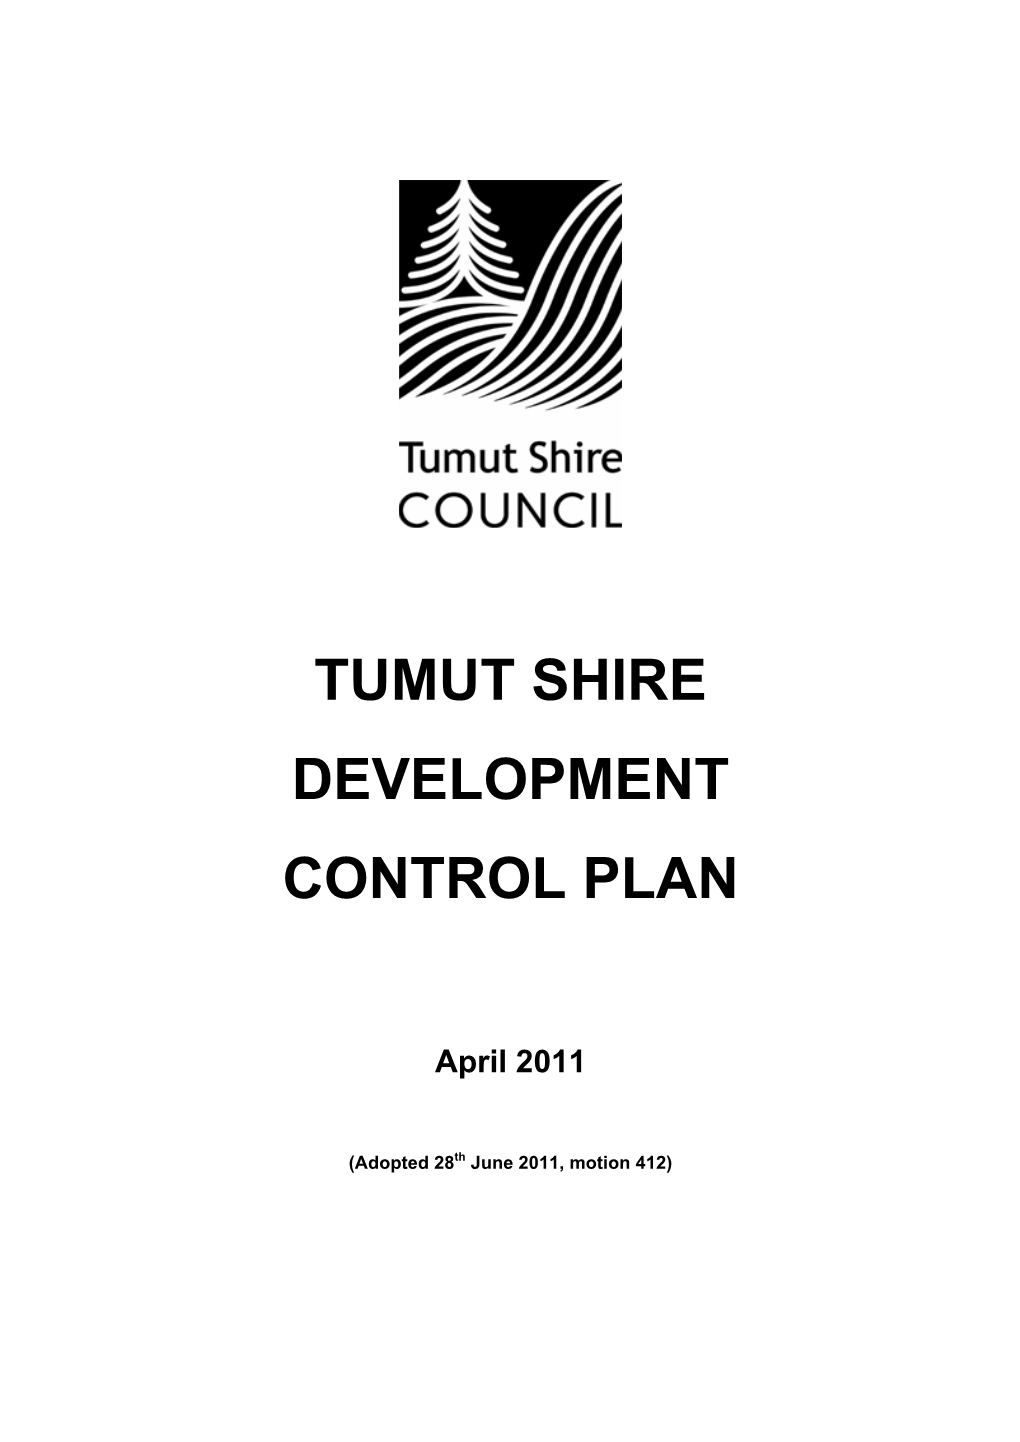 Tumut Shire Development Control Plan